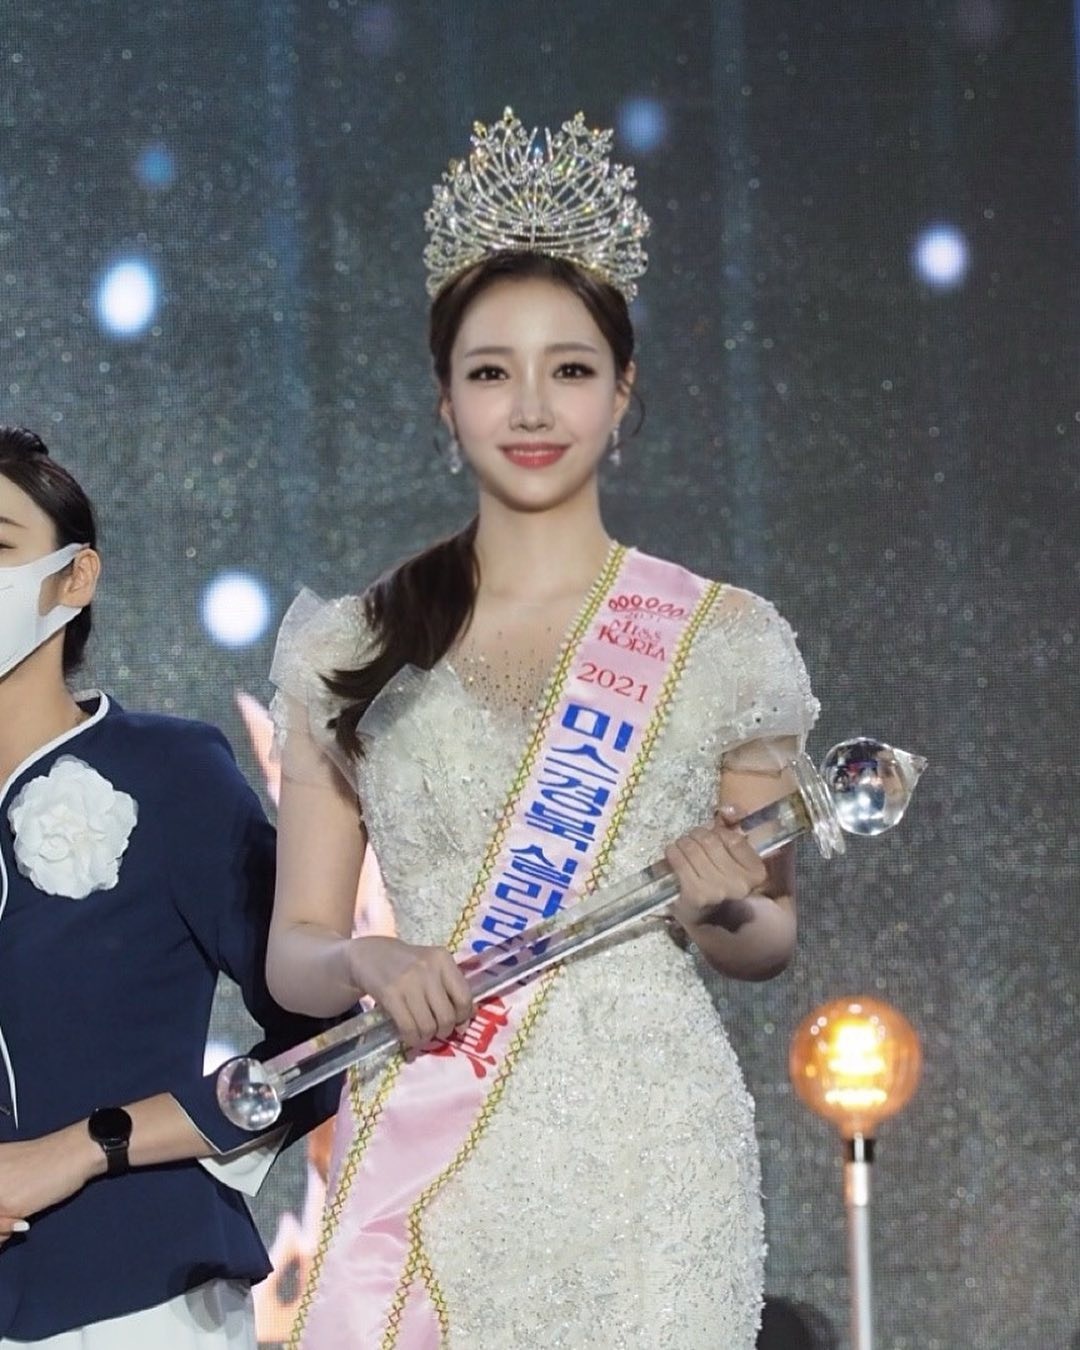 Miss International Korea 2022 is Kim Sujin